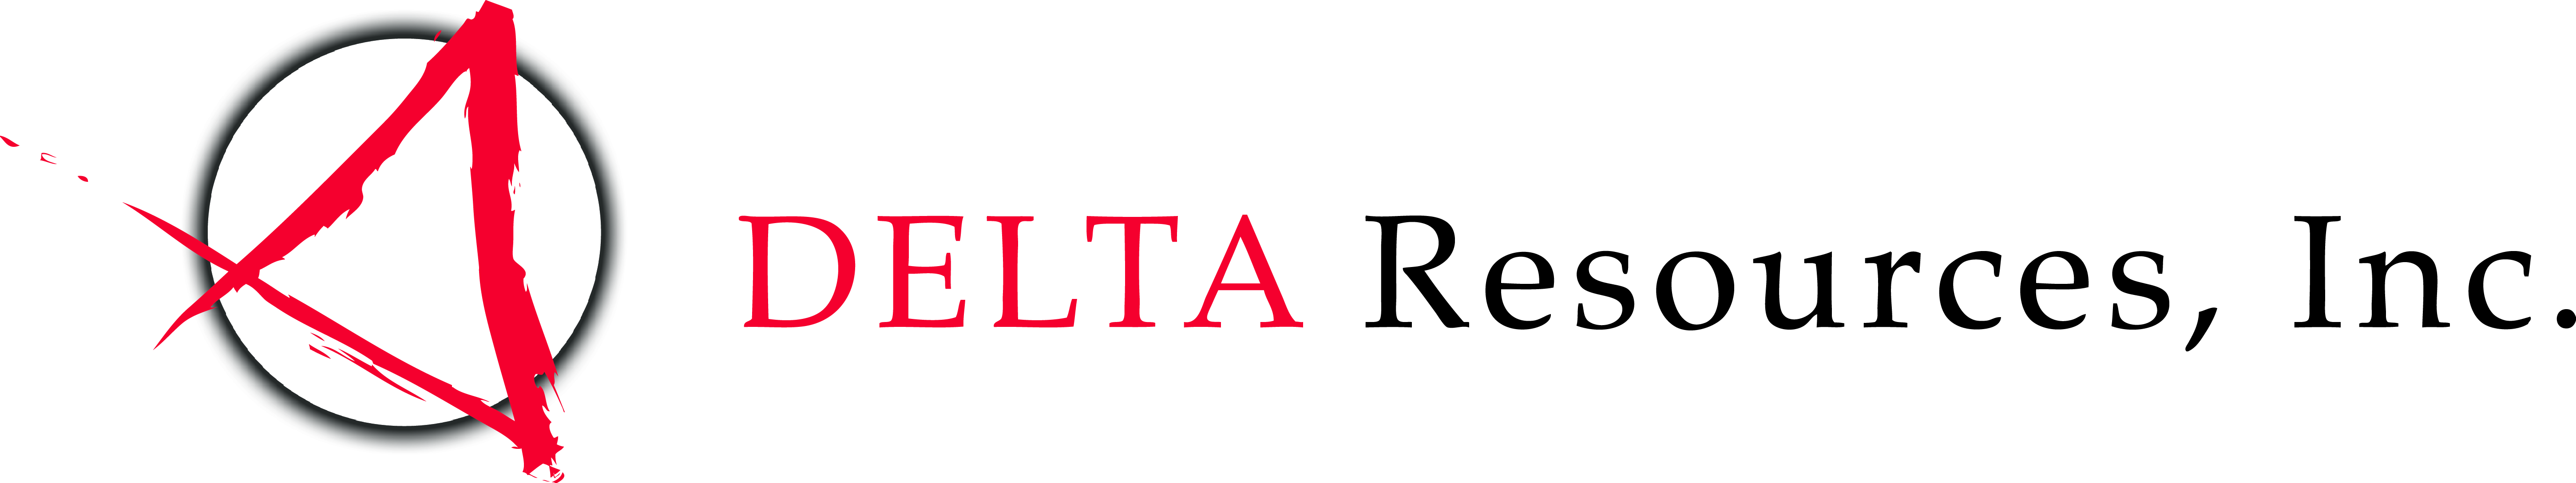 Delta Resources, Inc